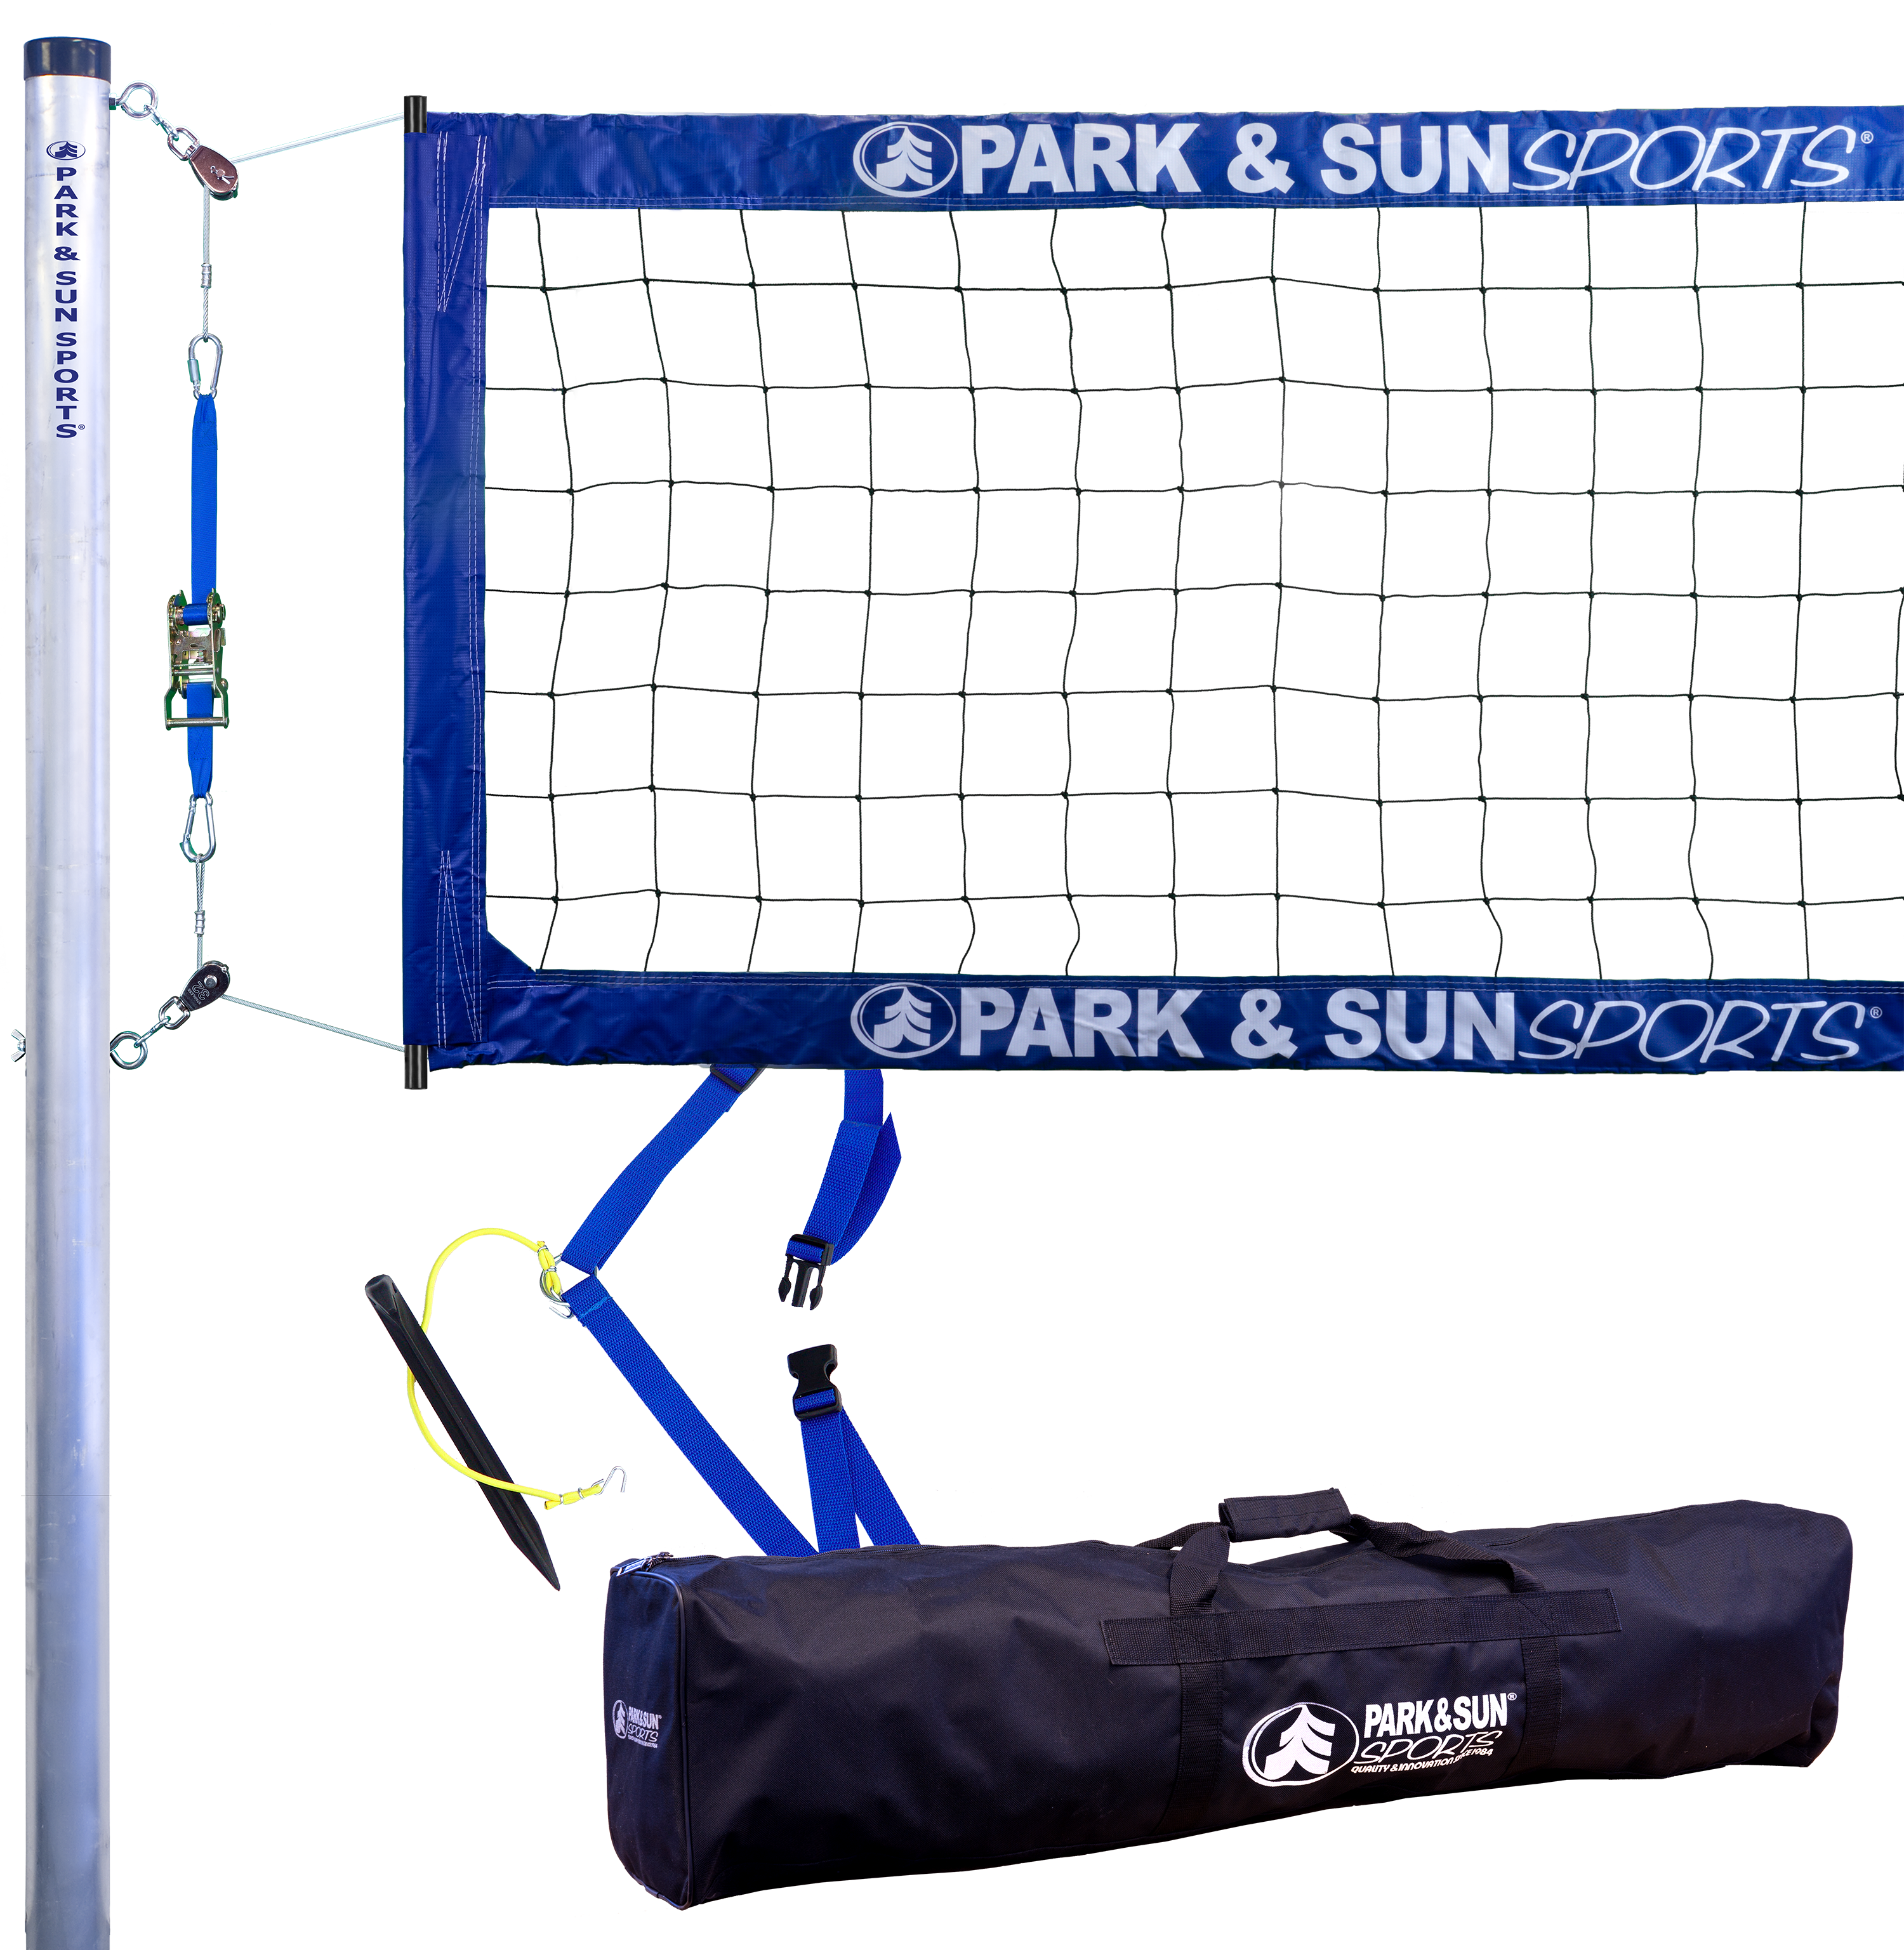 Park & Sun Sports Complete Outdoor Badminton Set with Carry Case Blue 